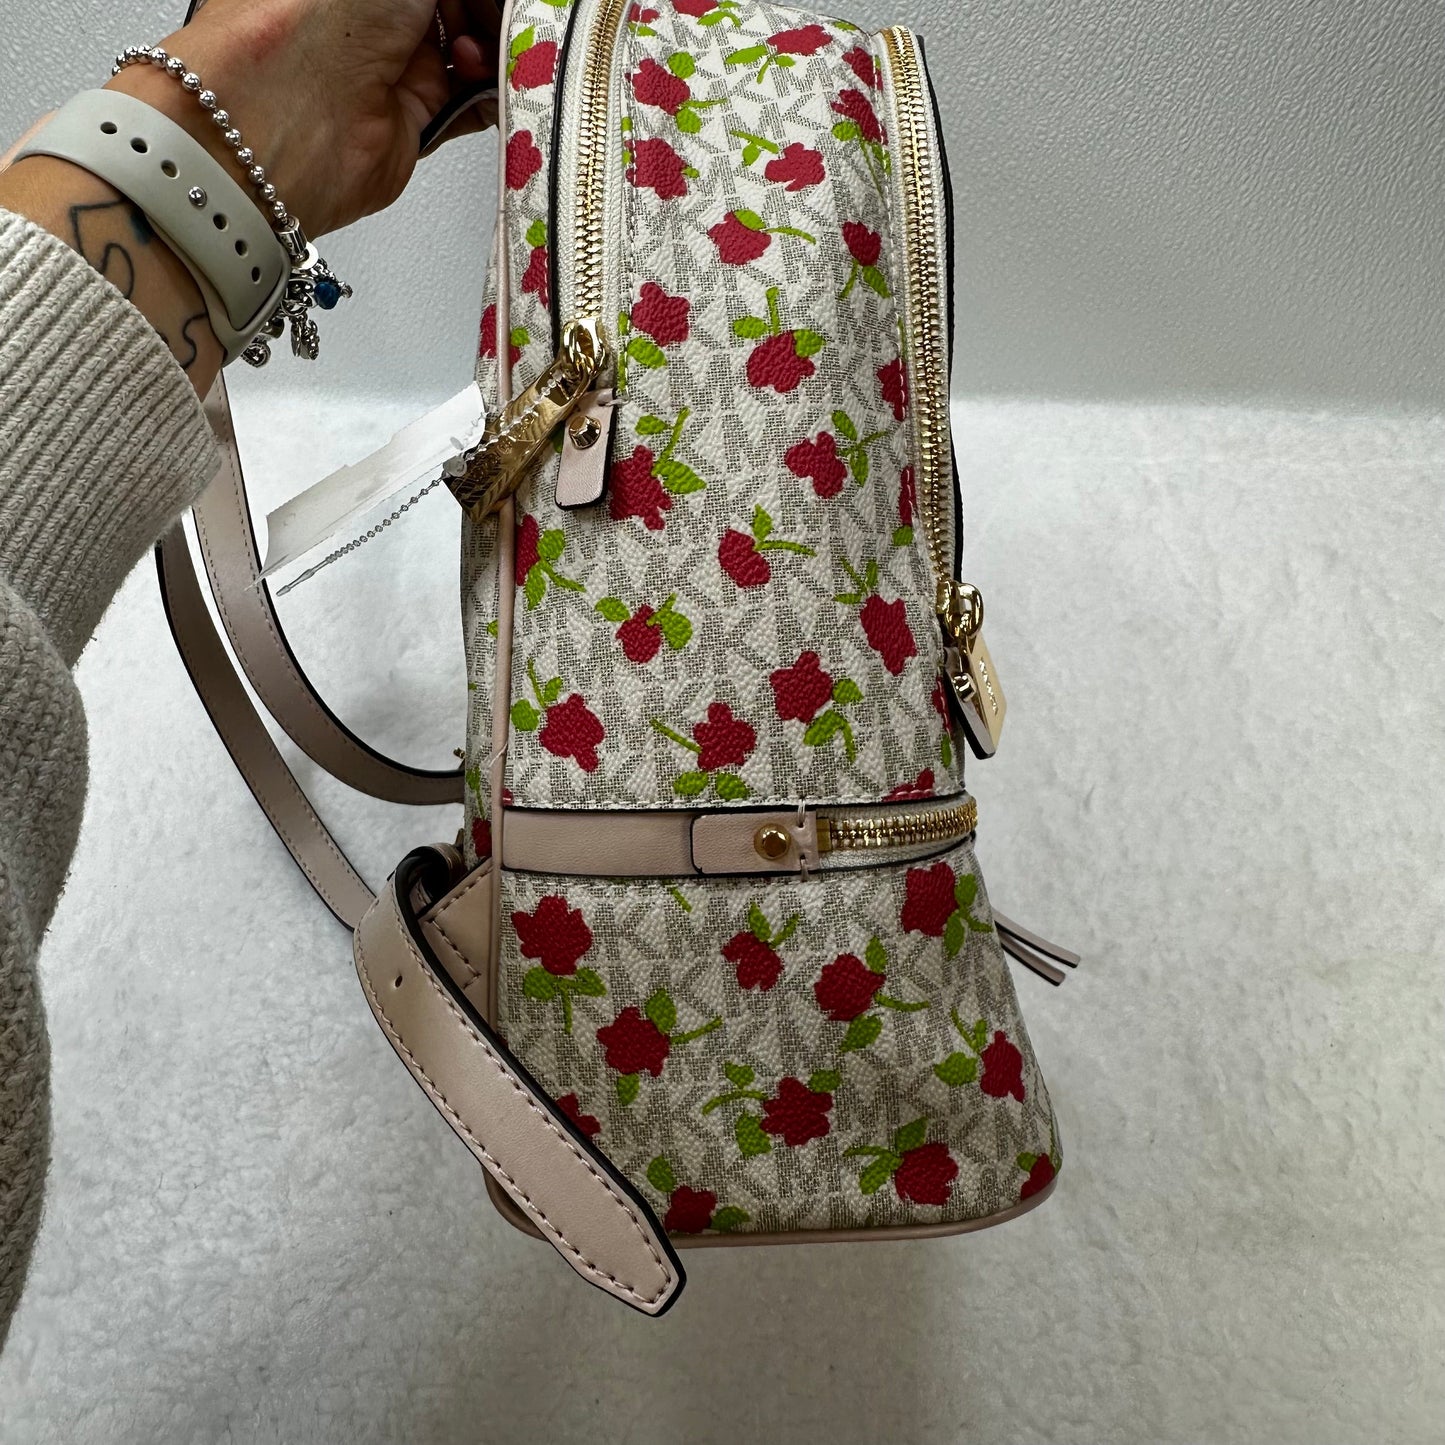 Backpack Michael Kors, Size Medium